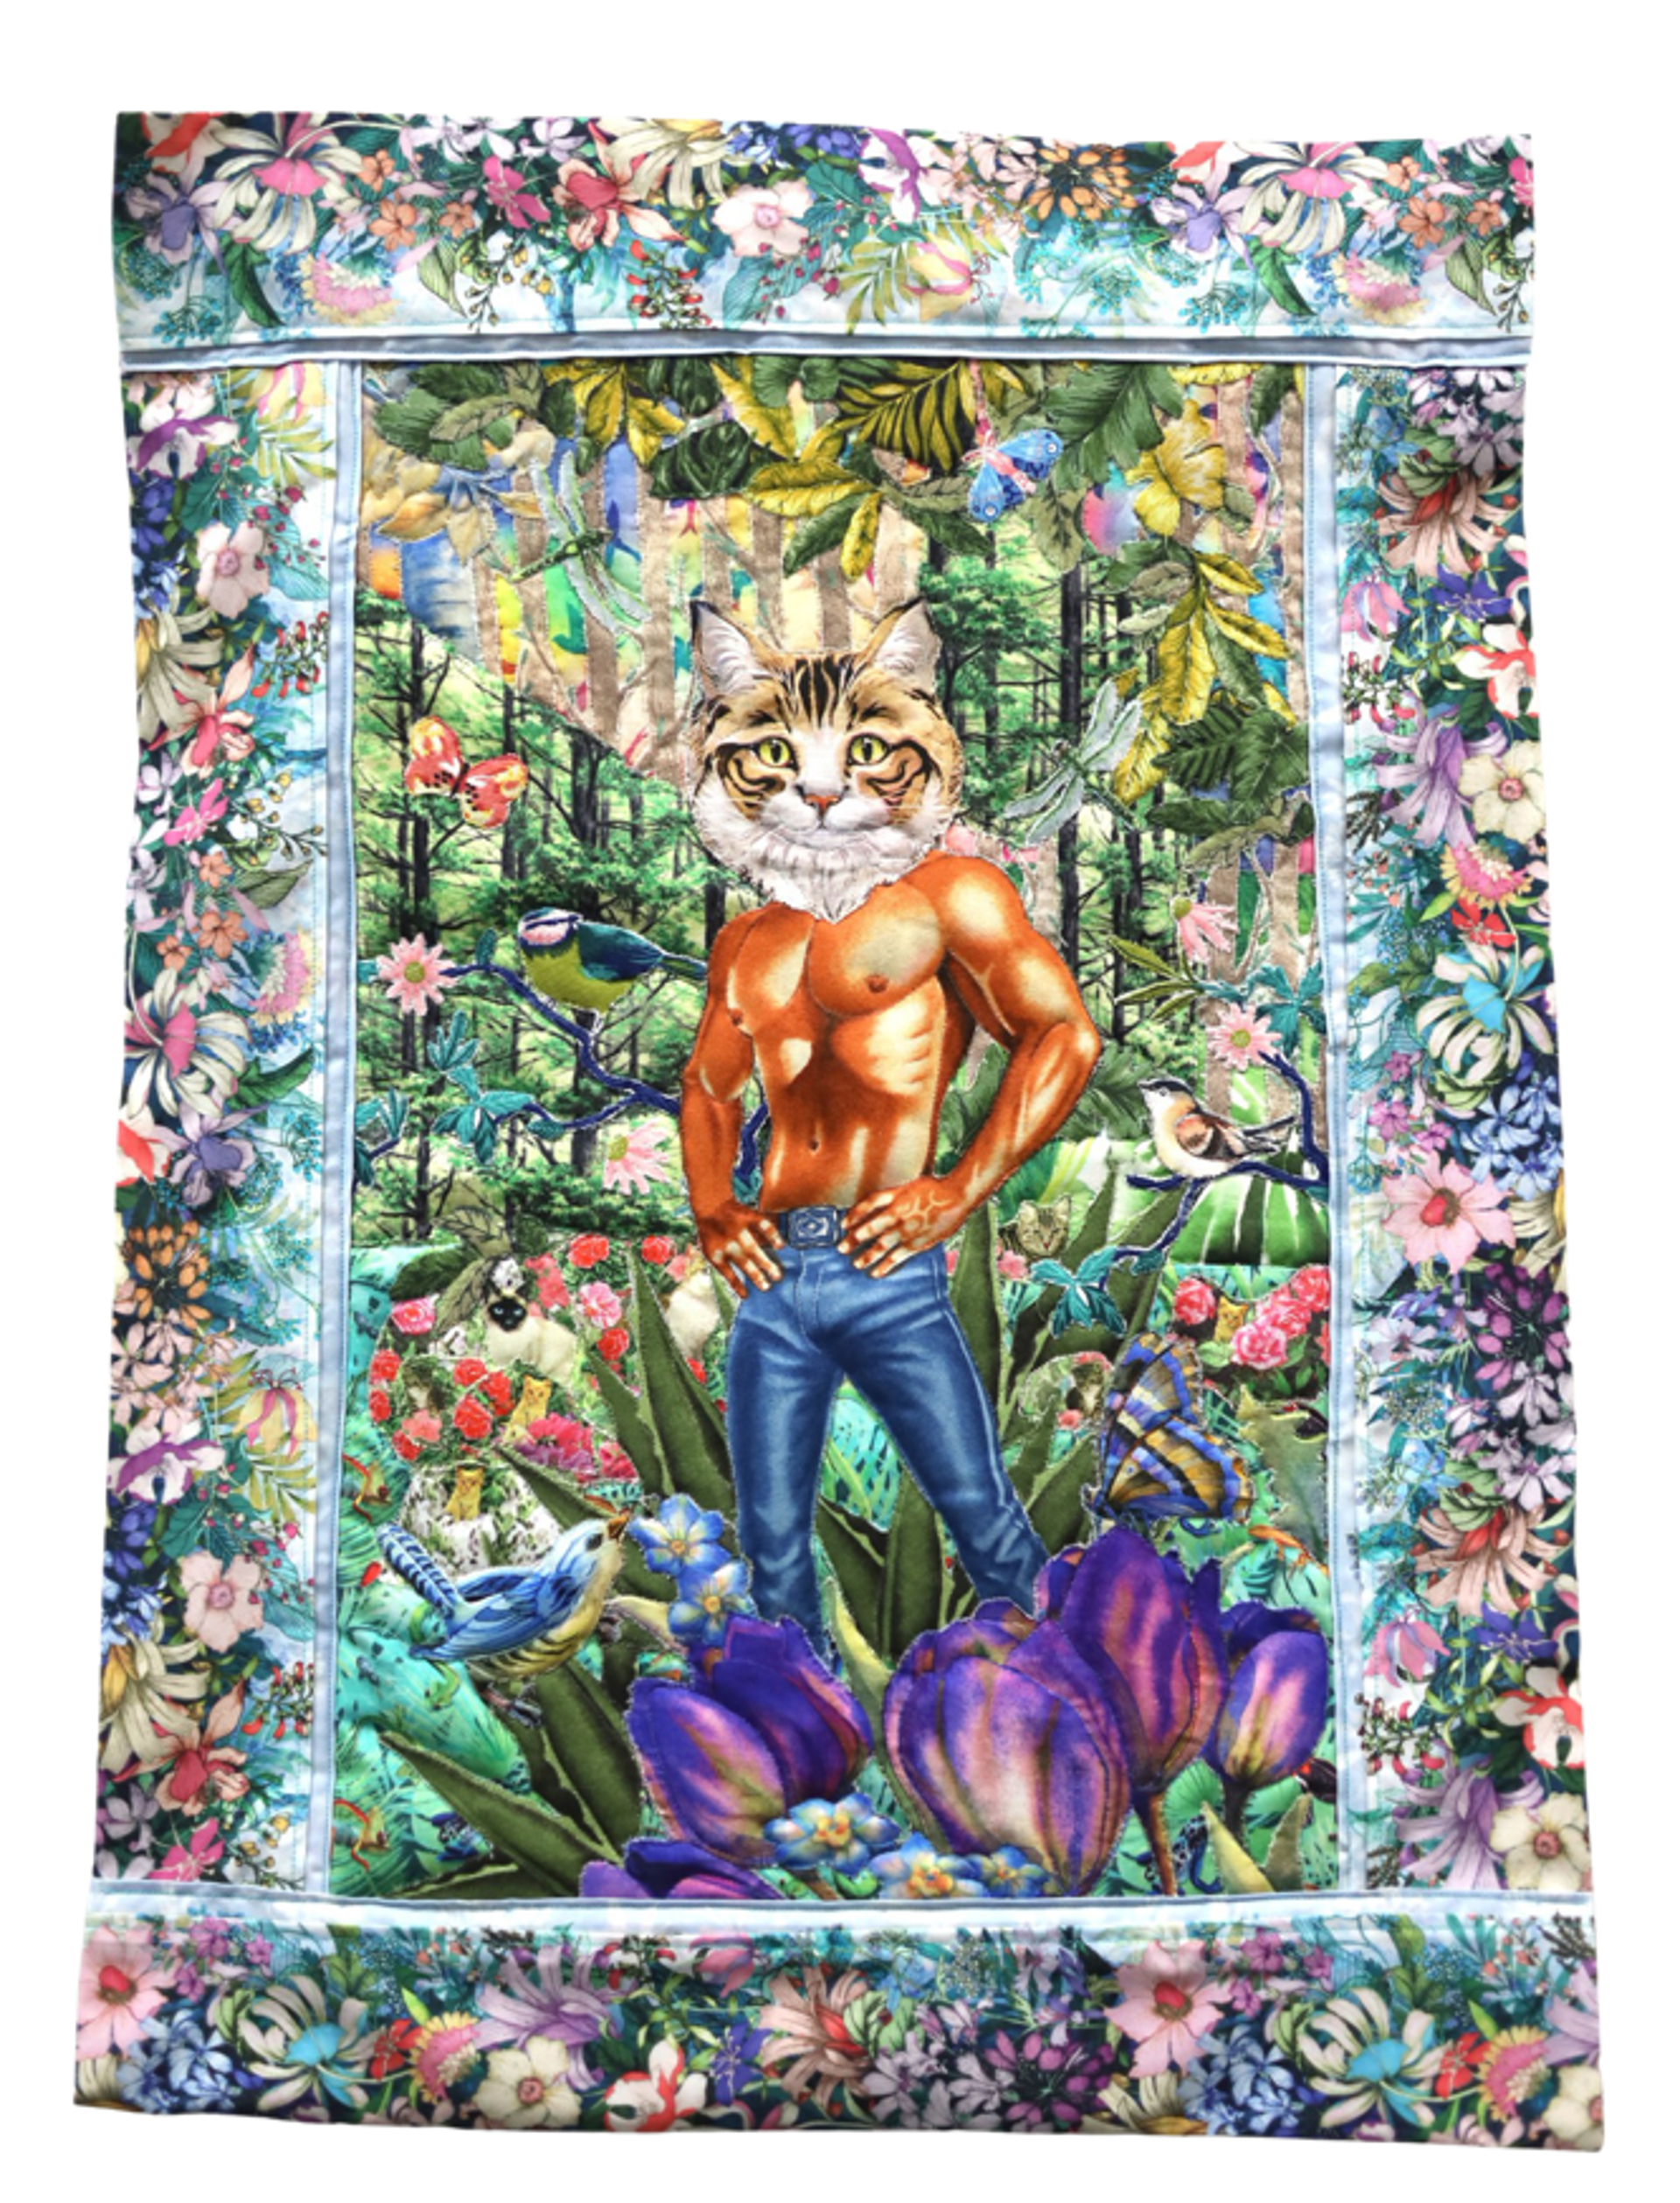 Forest Catboyfriend by Jane Tardo